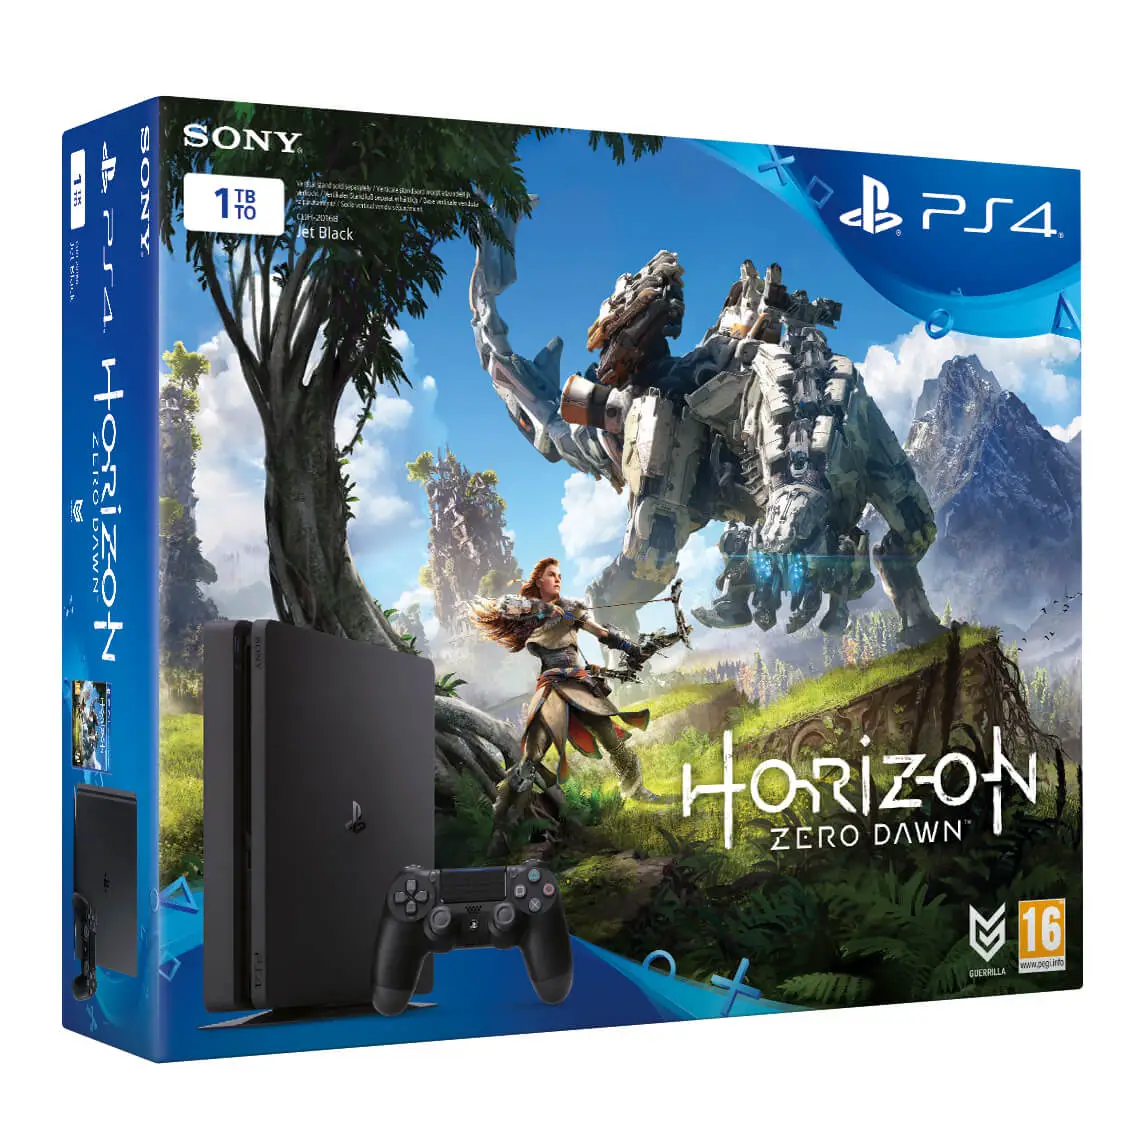 Horizon Zero Dawn 1TB PlayStation 4 Slim Bundle In Stores March 2017